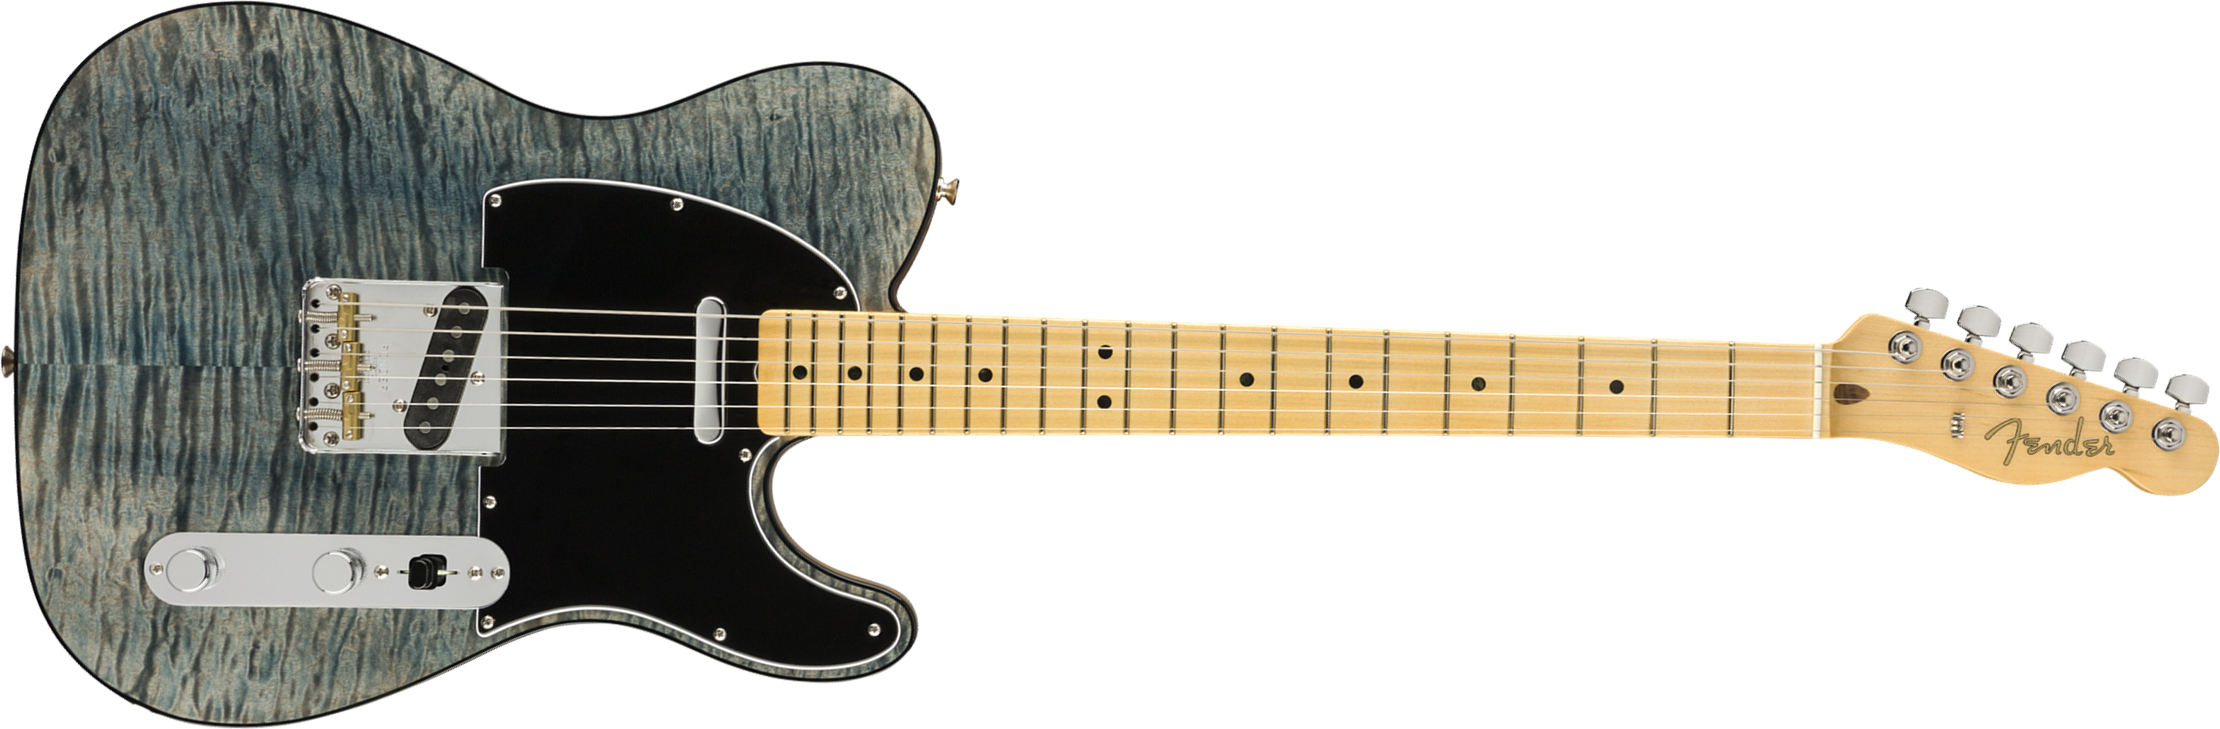 Fender Tele Quilt Maple Top Rarities Usa Mn - Blue Cloud - Televorm elektrische gitaar - Main picture